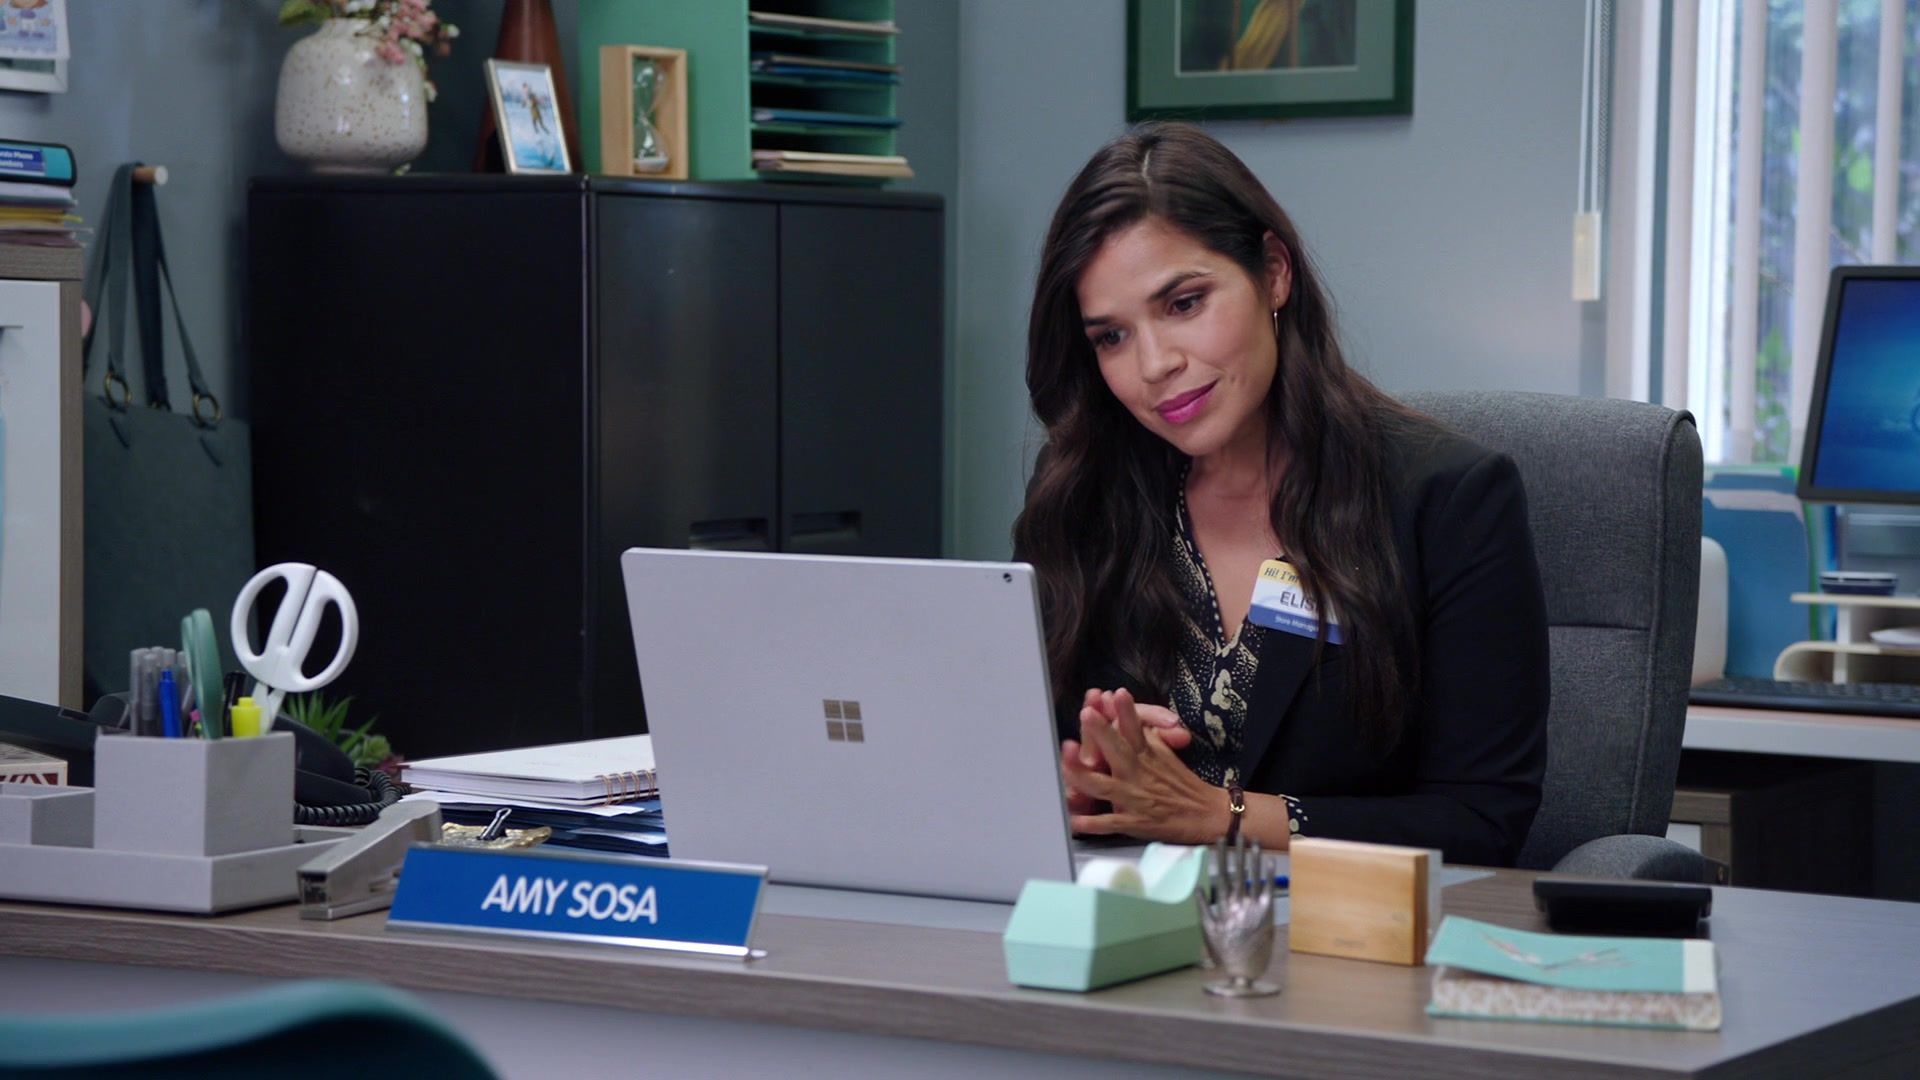 Microsoft Surface Notebook Of America Ferrera As Amelia 'Amy' Sosa In Superstore S06E01 Essential (2020)